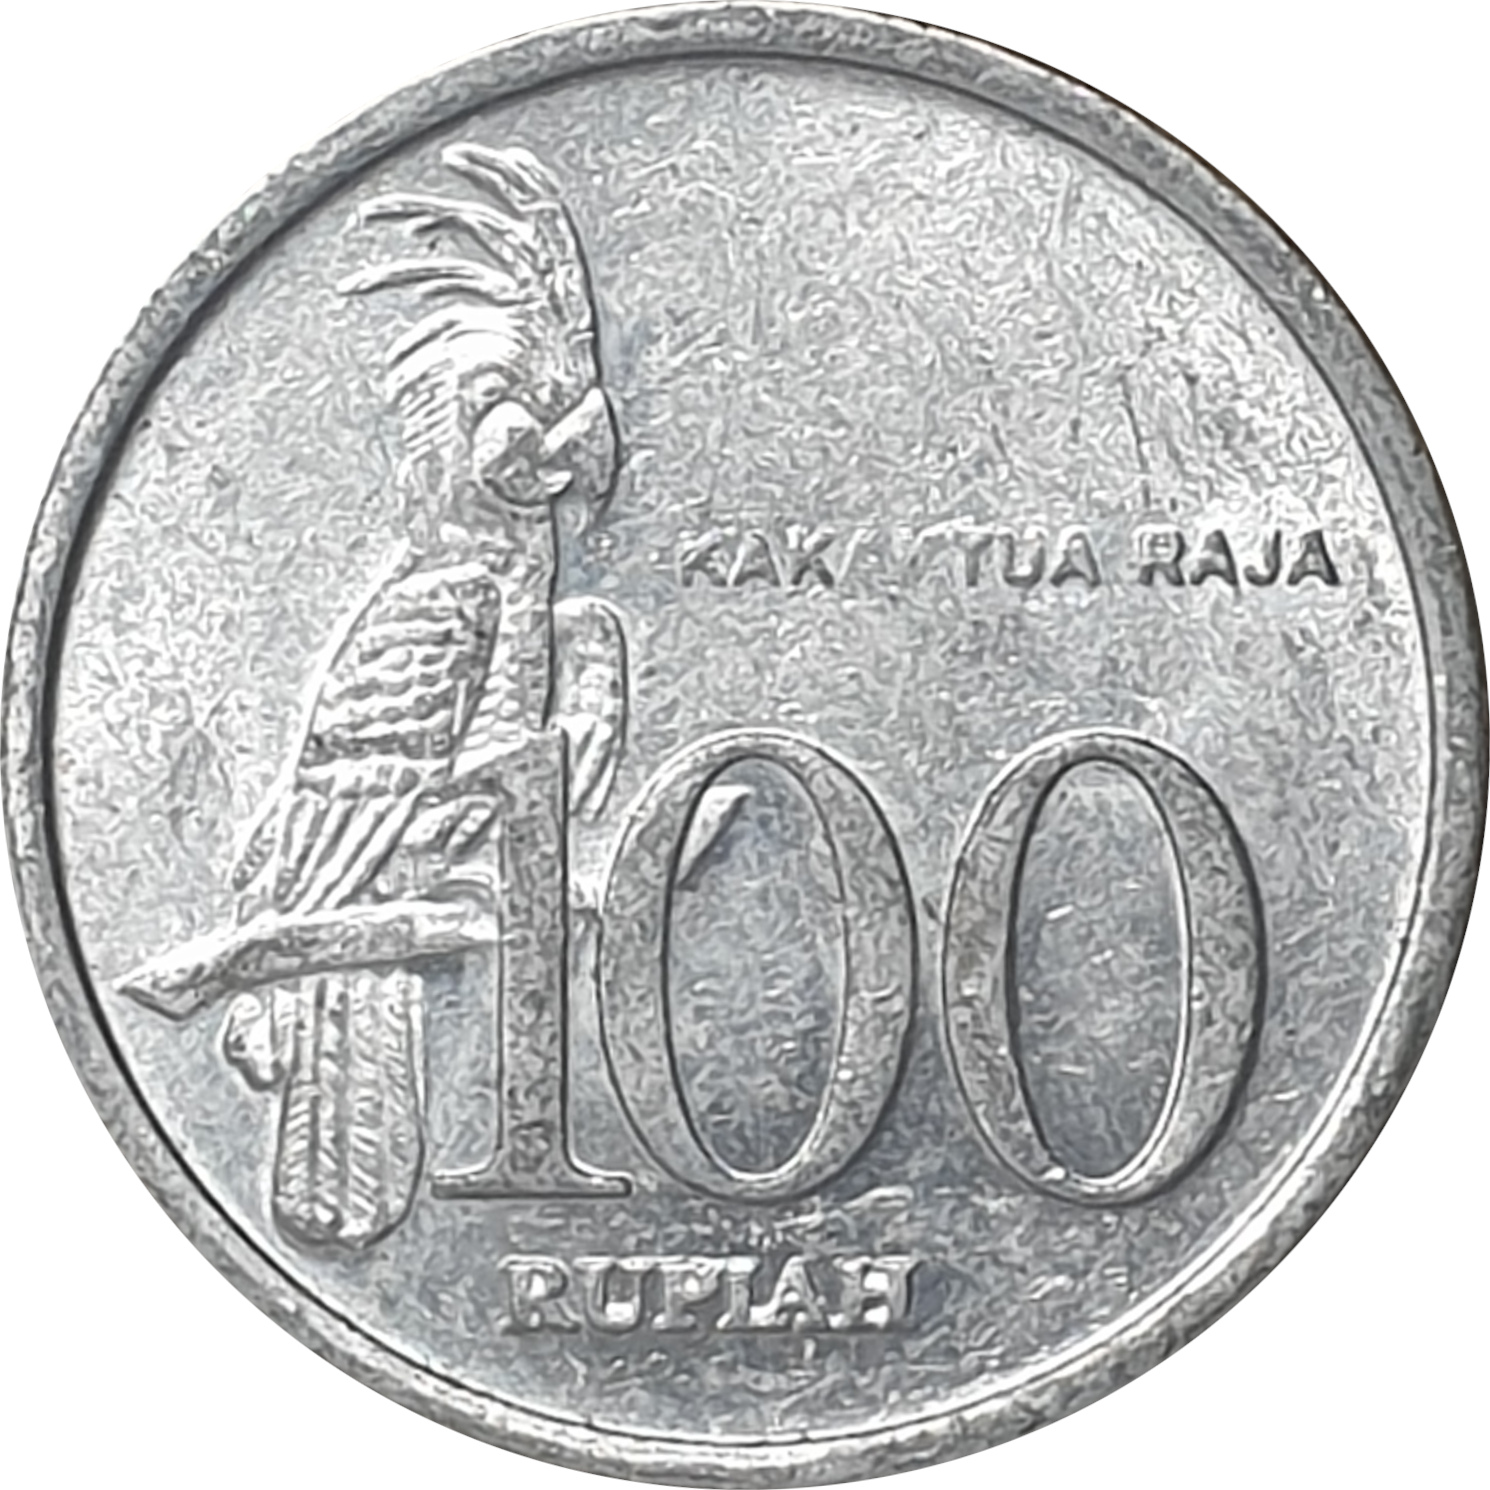 100 rupiah - Parrot